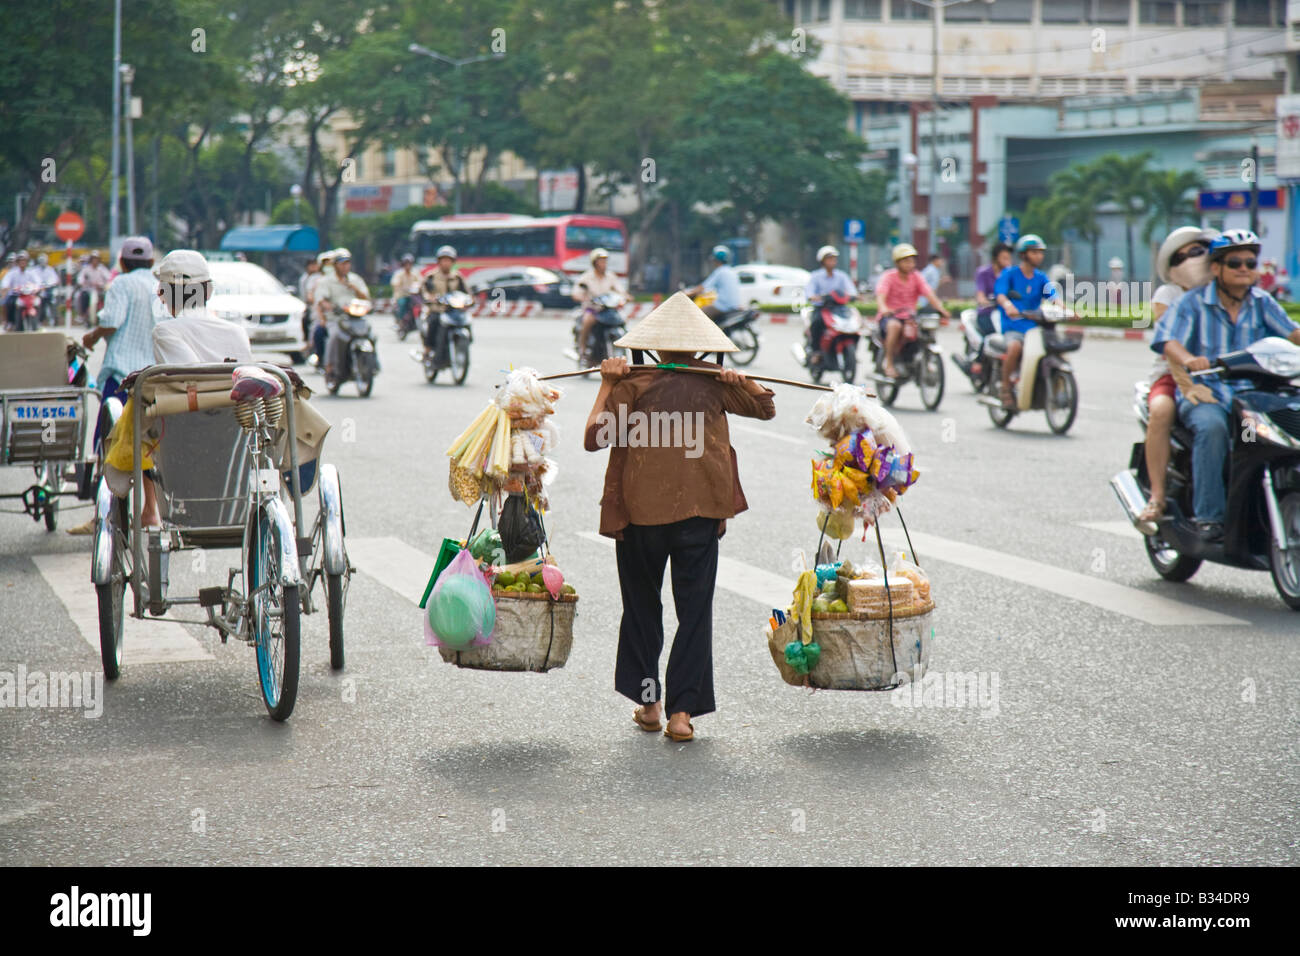 Scena di strada in Ho Chi Minh, Vietnam Foto Stock